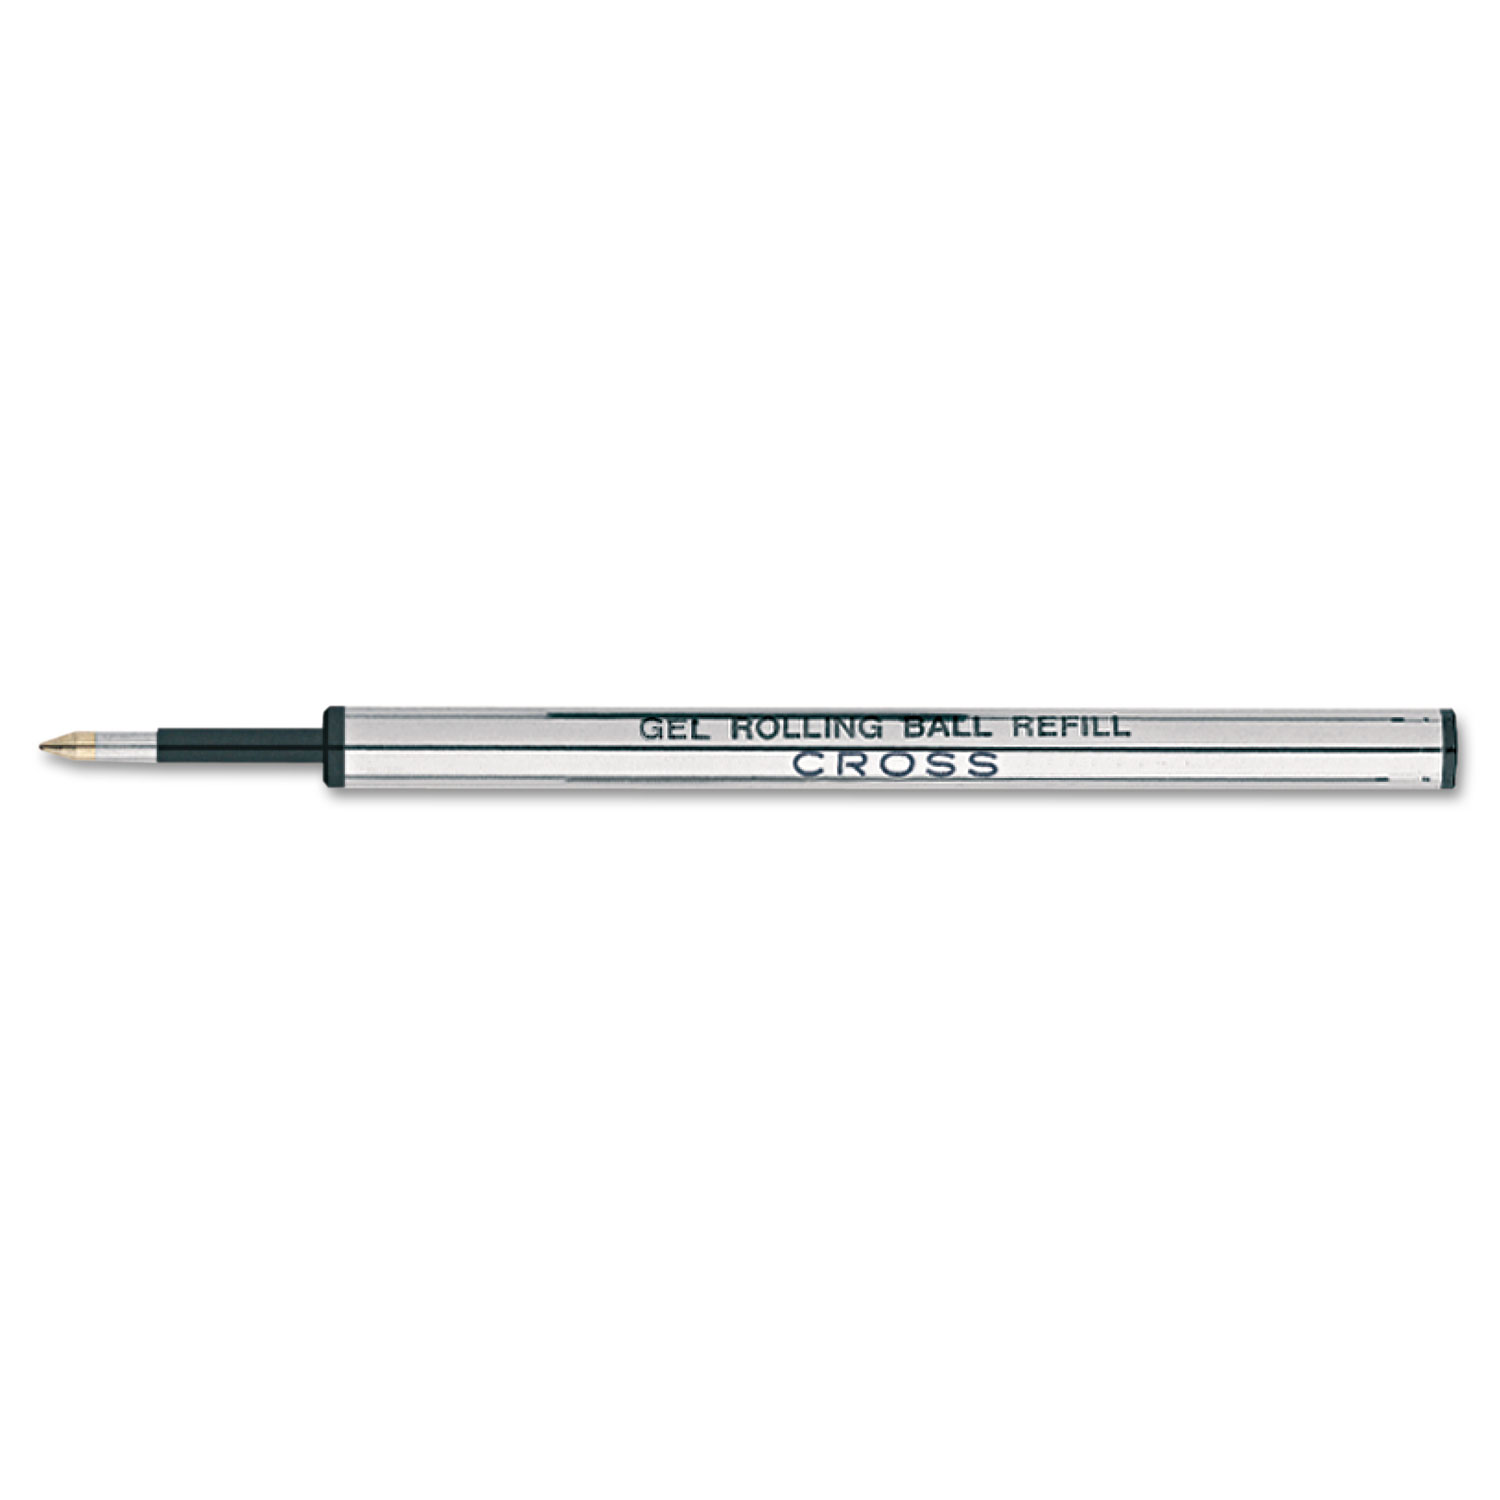  Cross 8521 Refill for Cross Selectip Gel Roller Ball Pens, Medium Point, Blue Ink (CRO8521) 